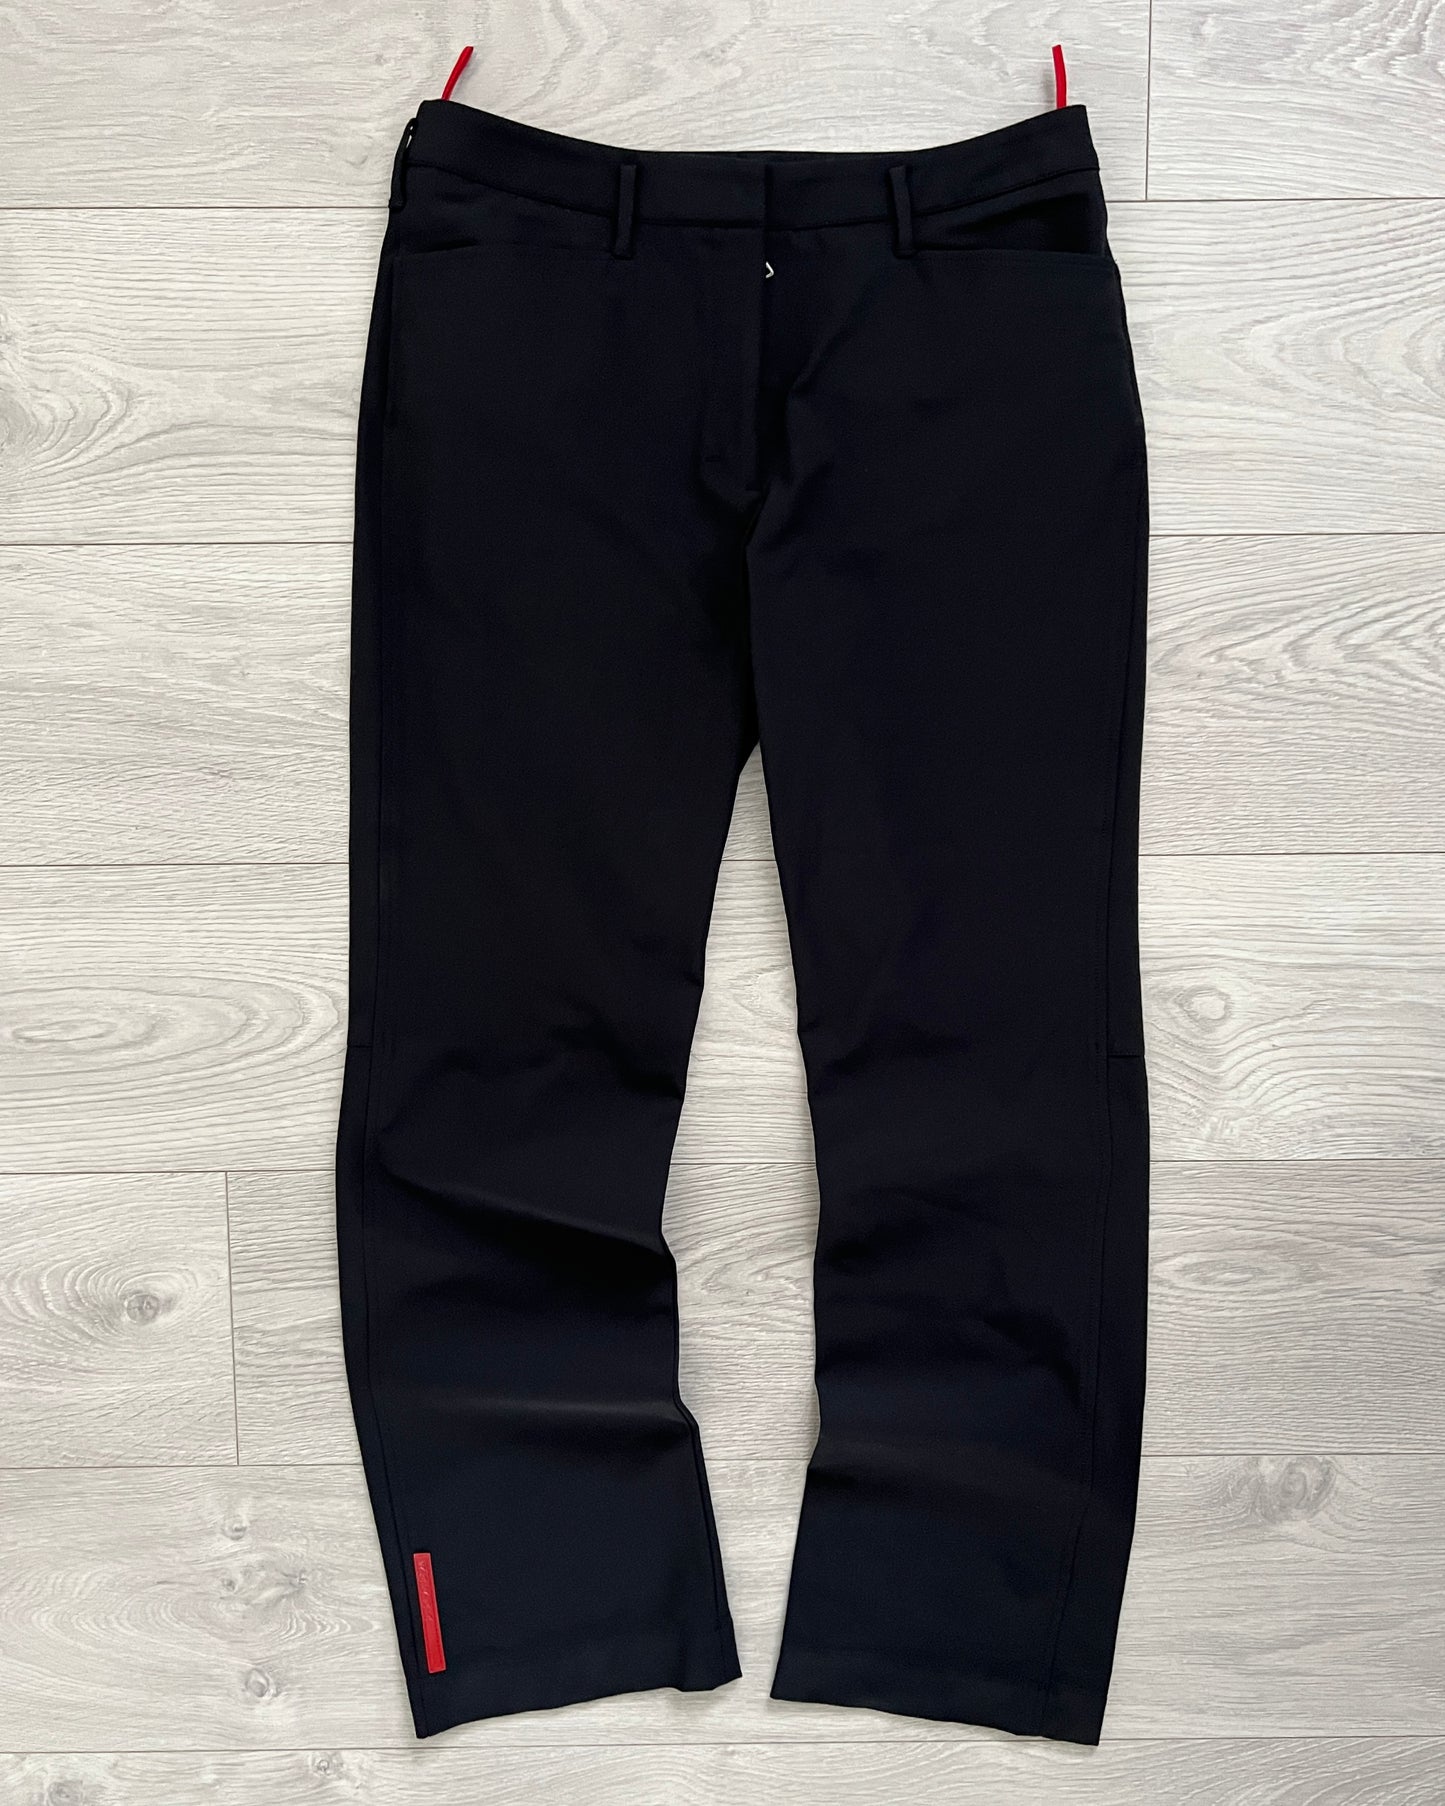 Prada Sport 00s Technical Fabric Red Tab Pants - Size 30